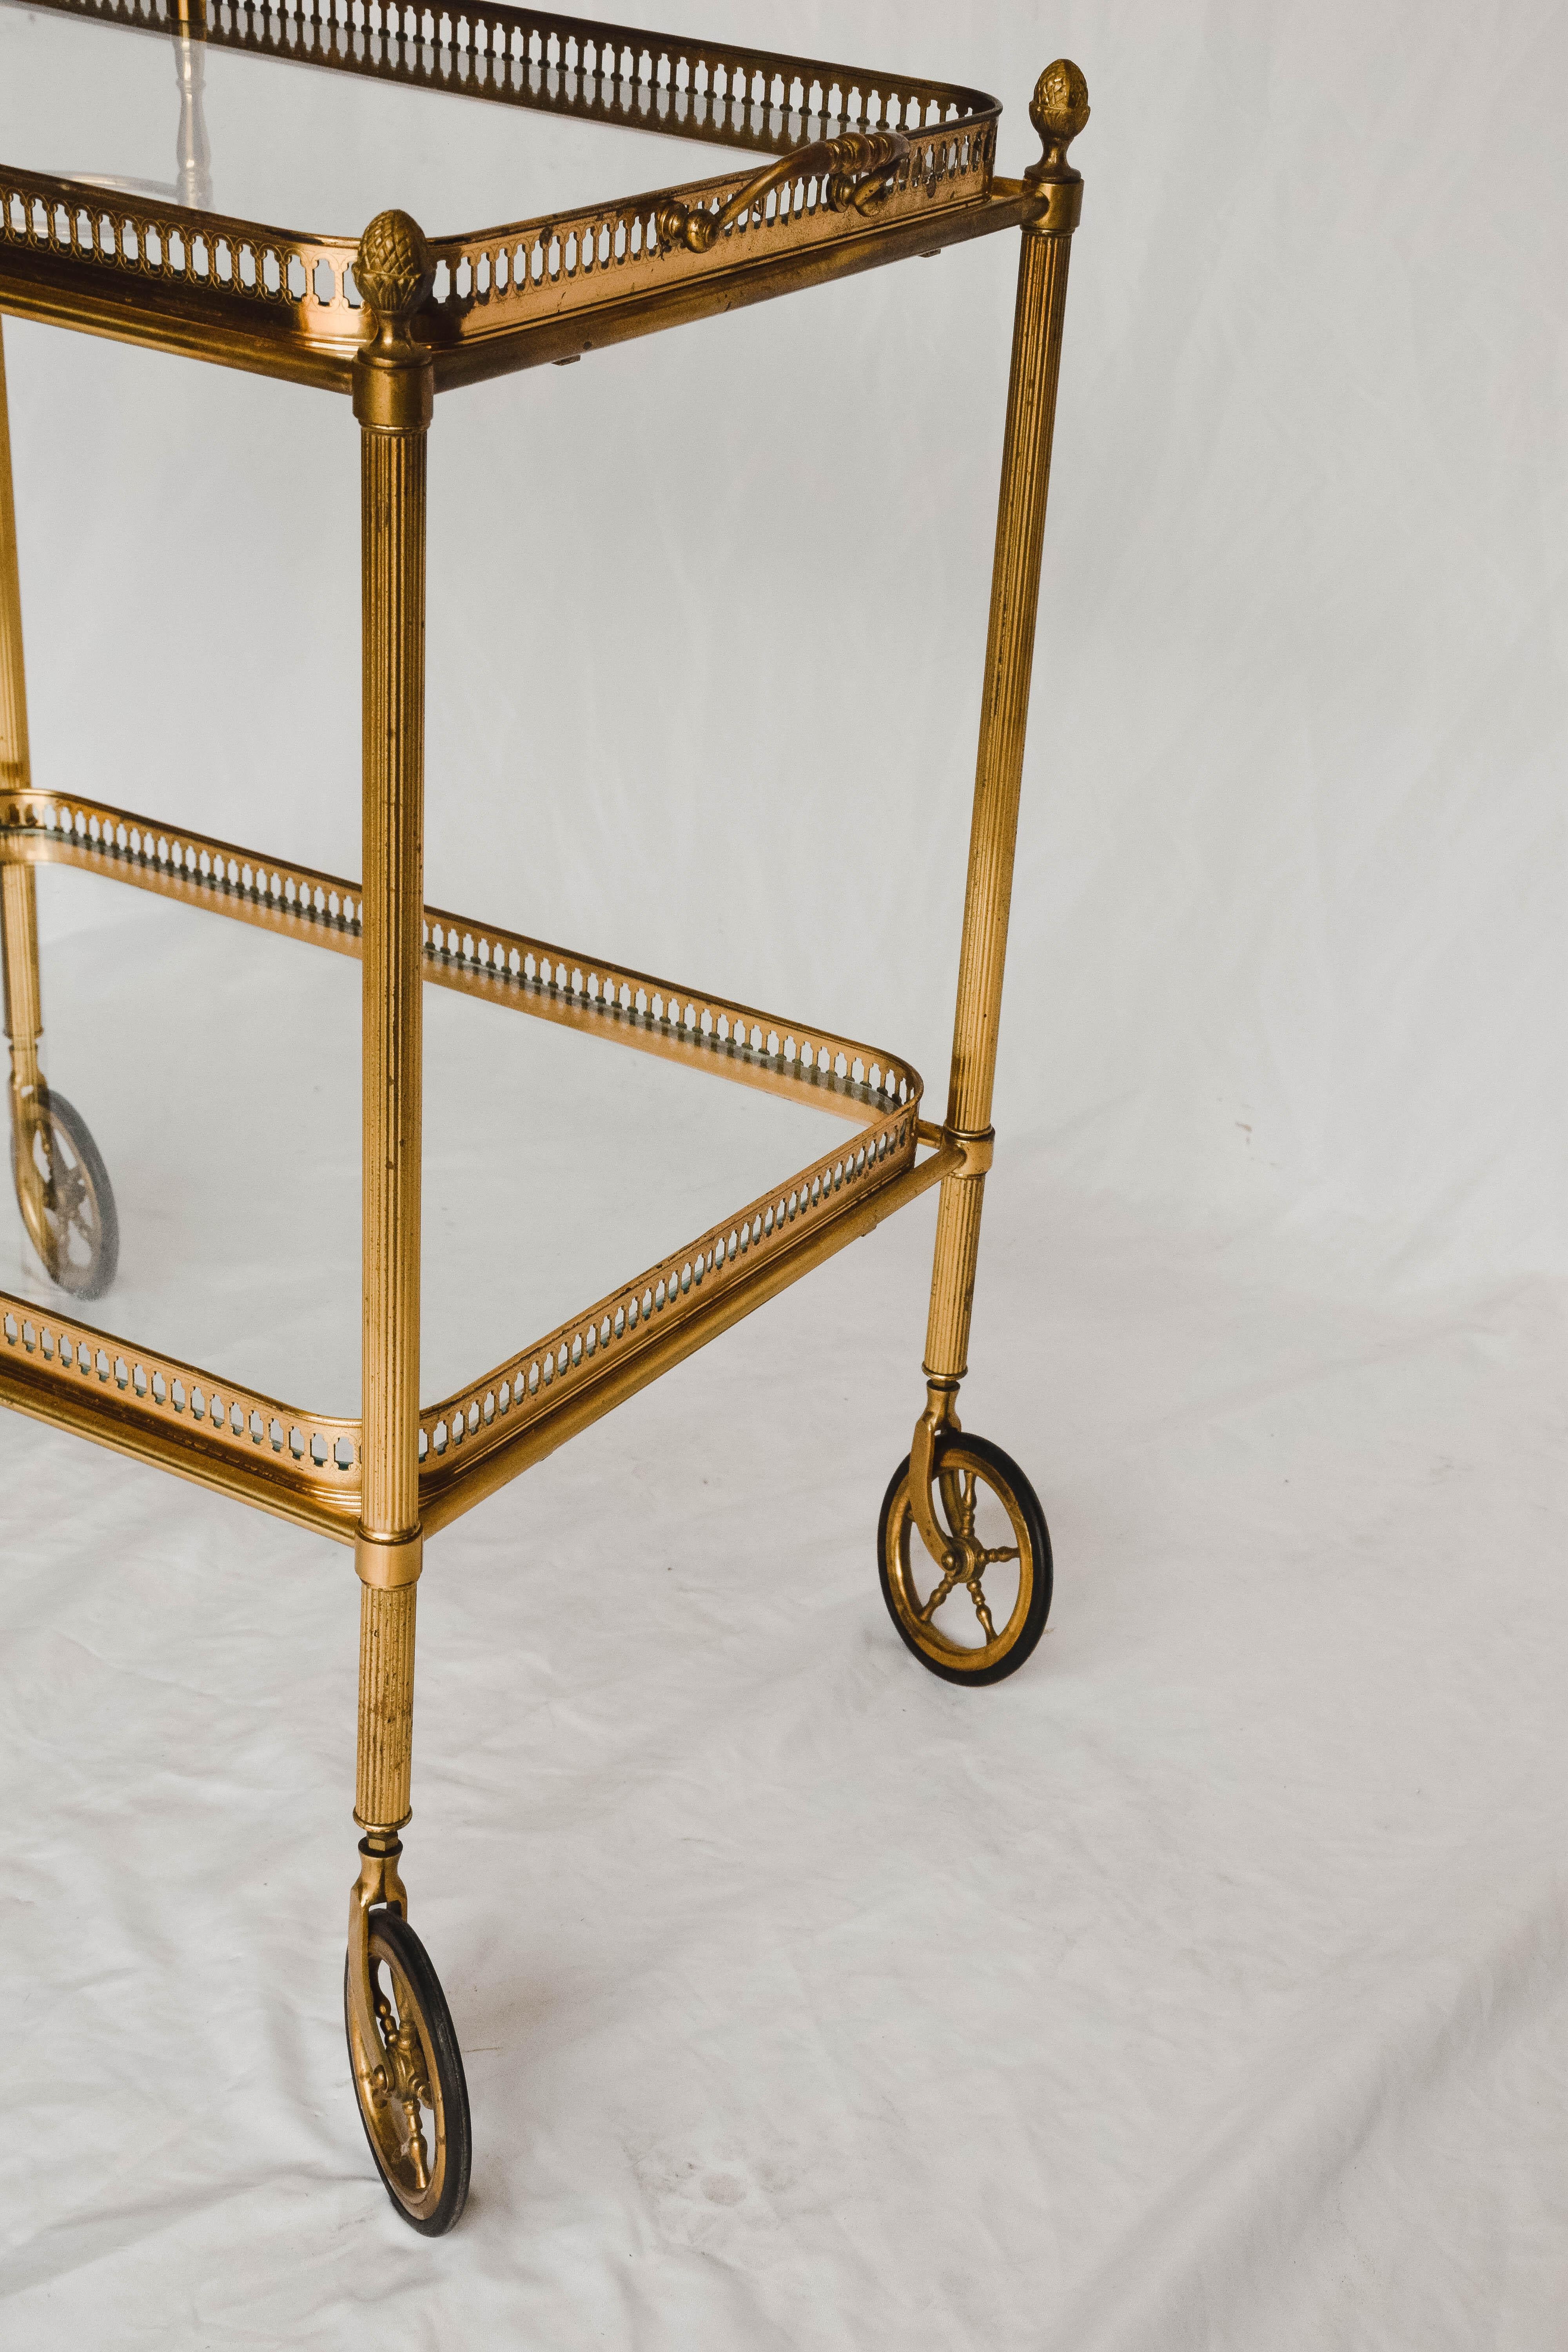 Midcentury Brass and Glass Bar Cart 1